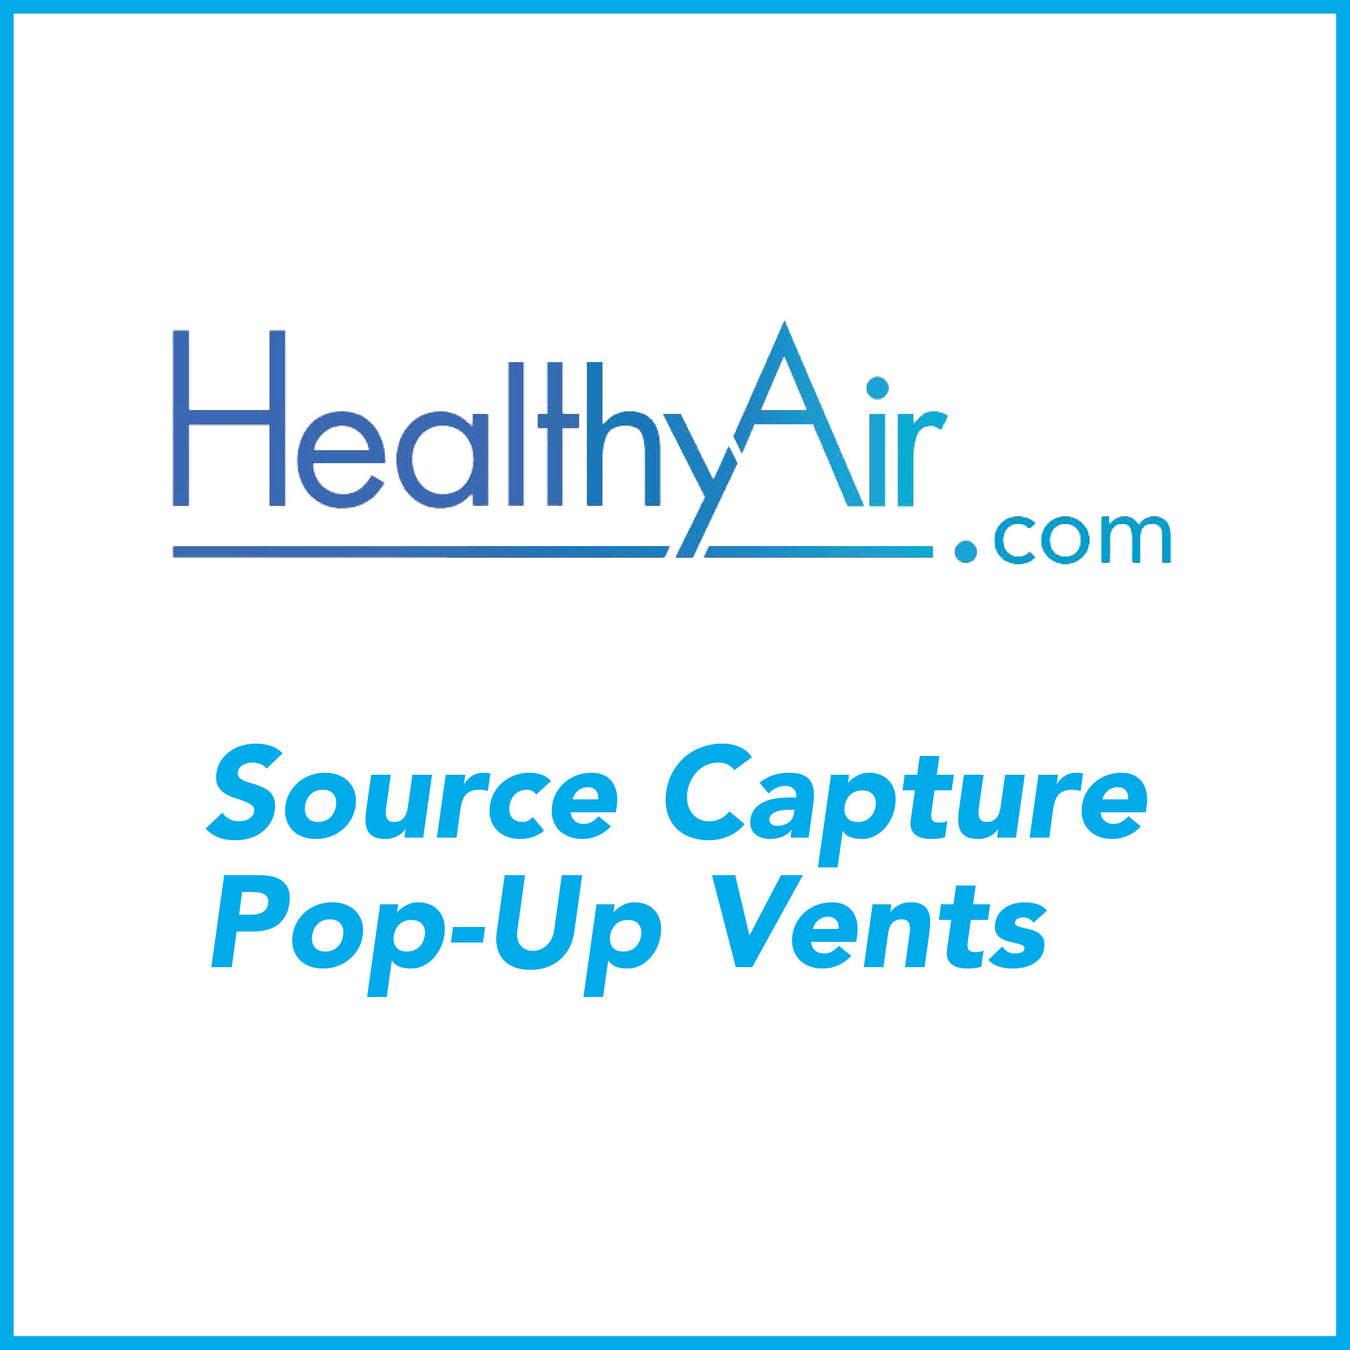 Source Capture "Pop-Up" Vents